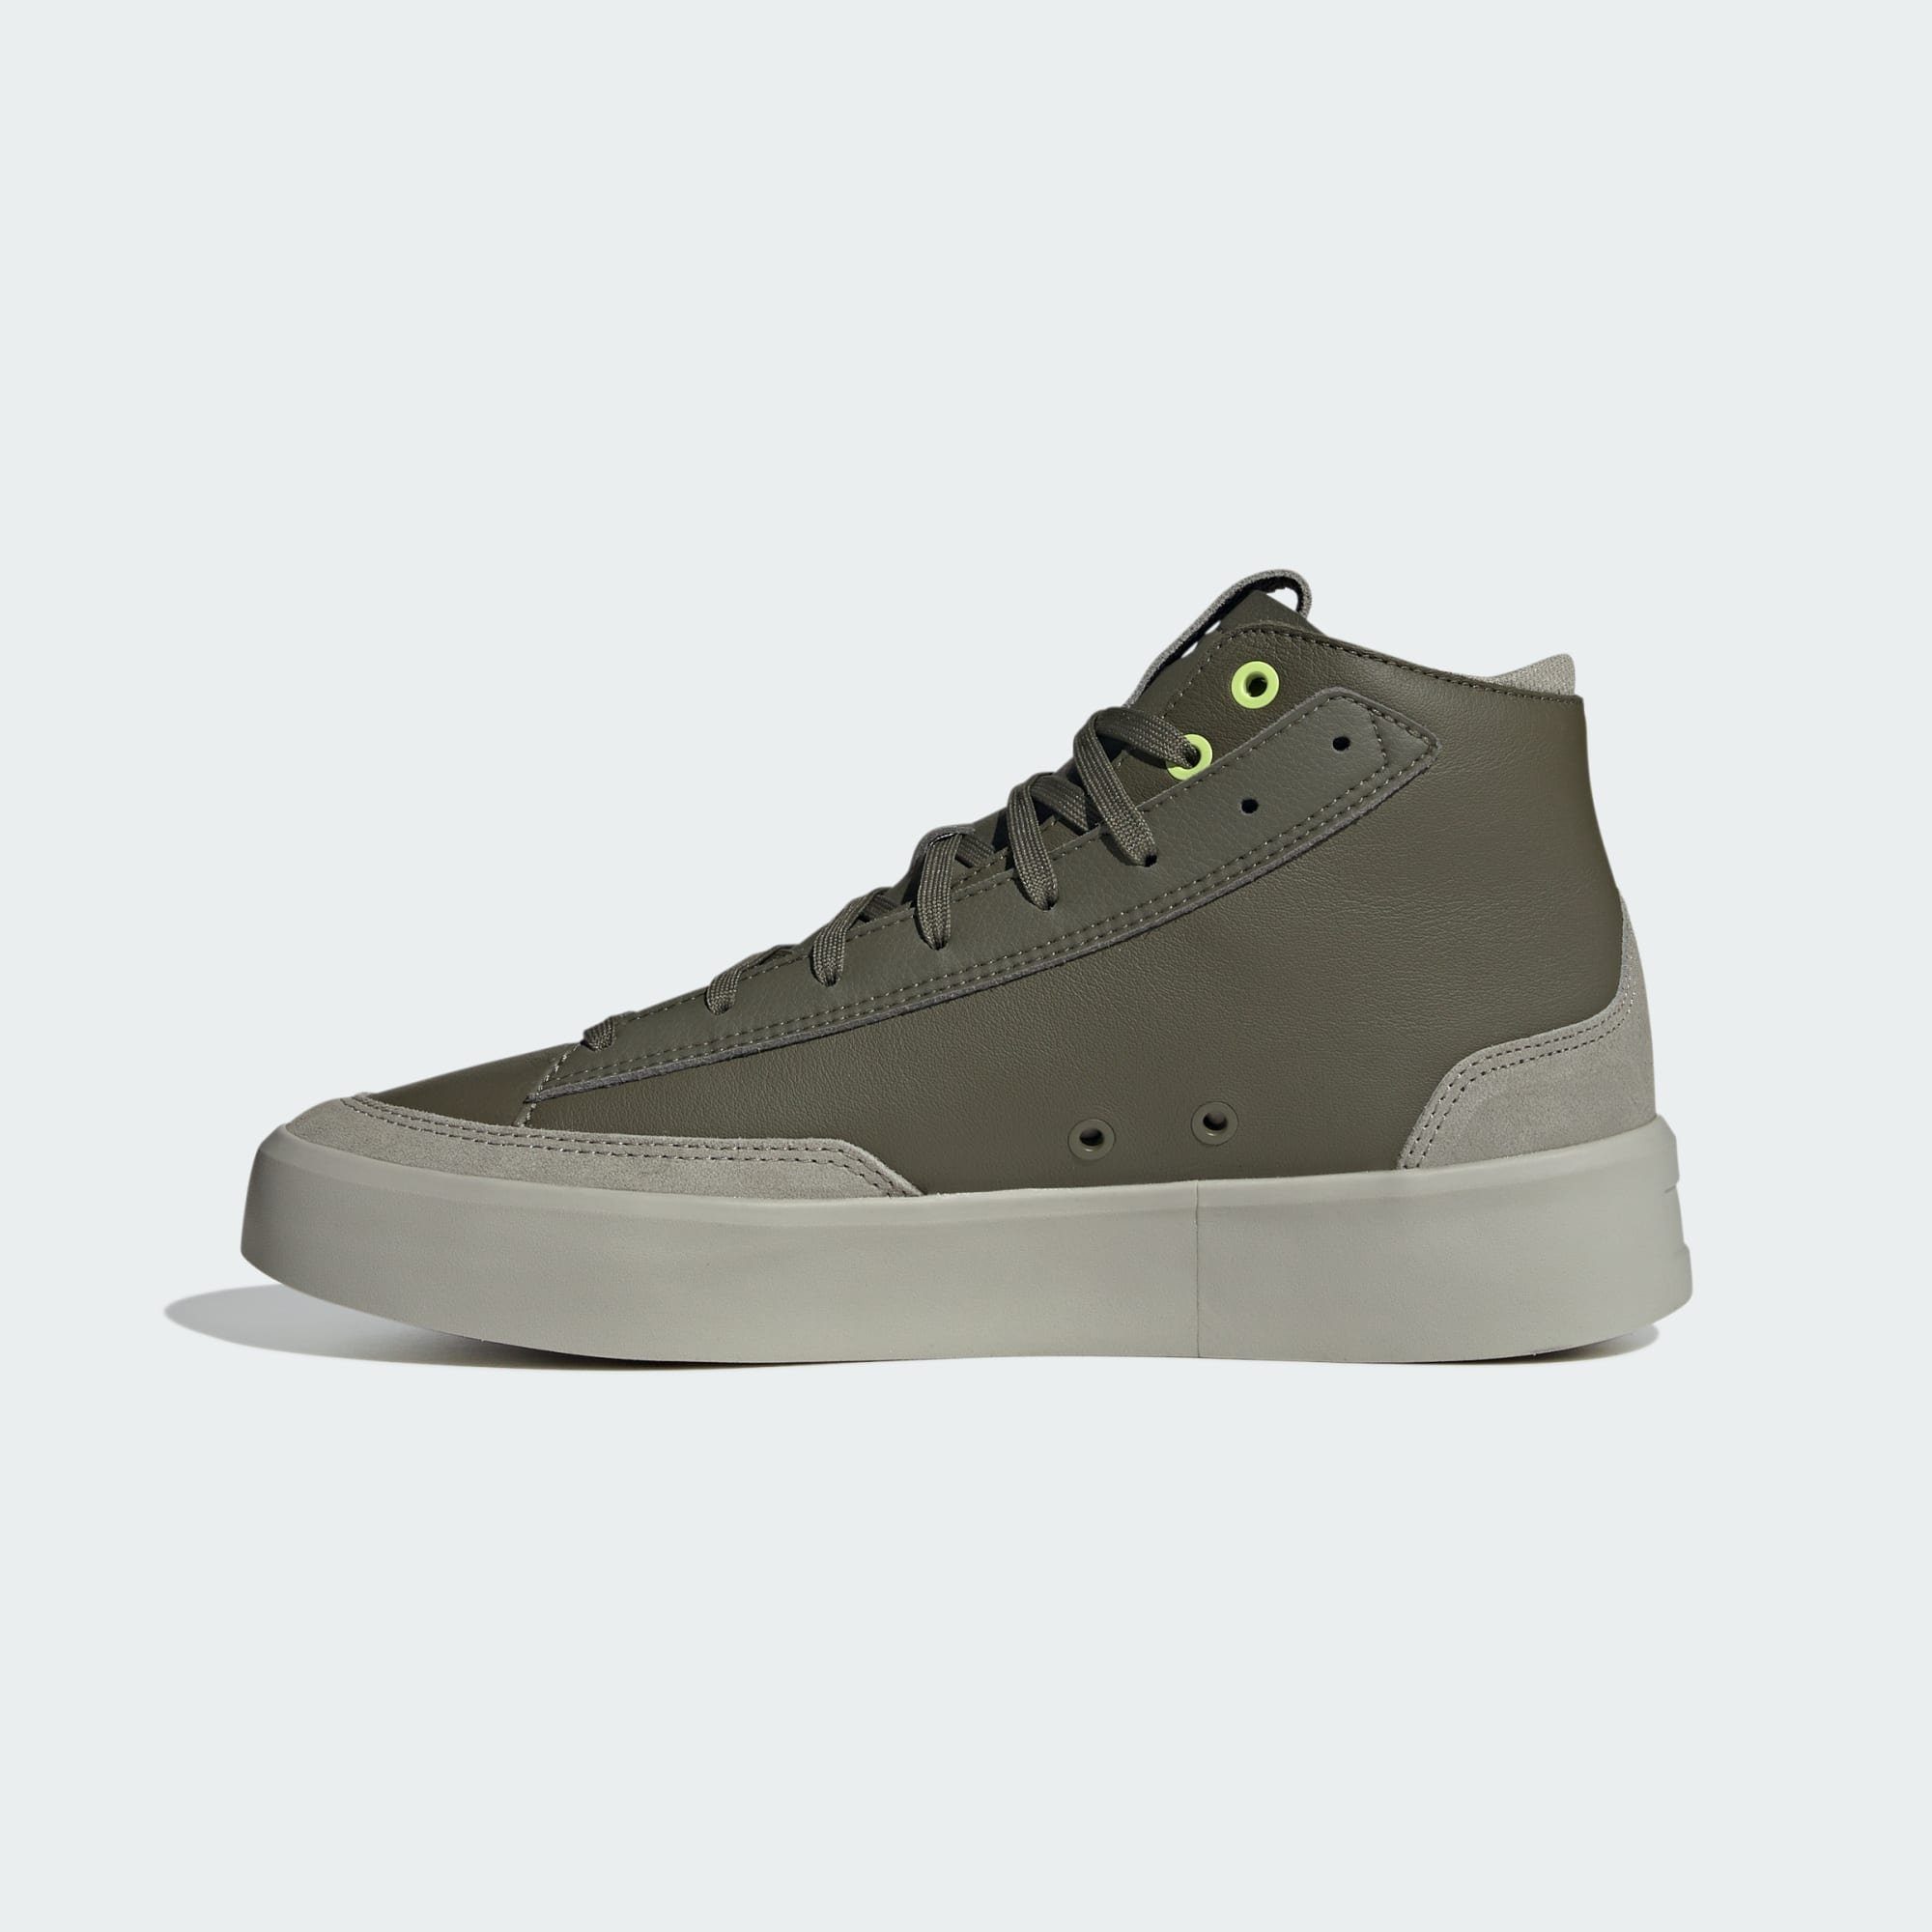 ZNSORED Pebble Sneaker Lime / SCHUH Silver / HI Sportswear Olive Pulse Strata adidas